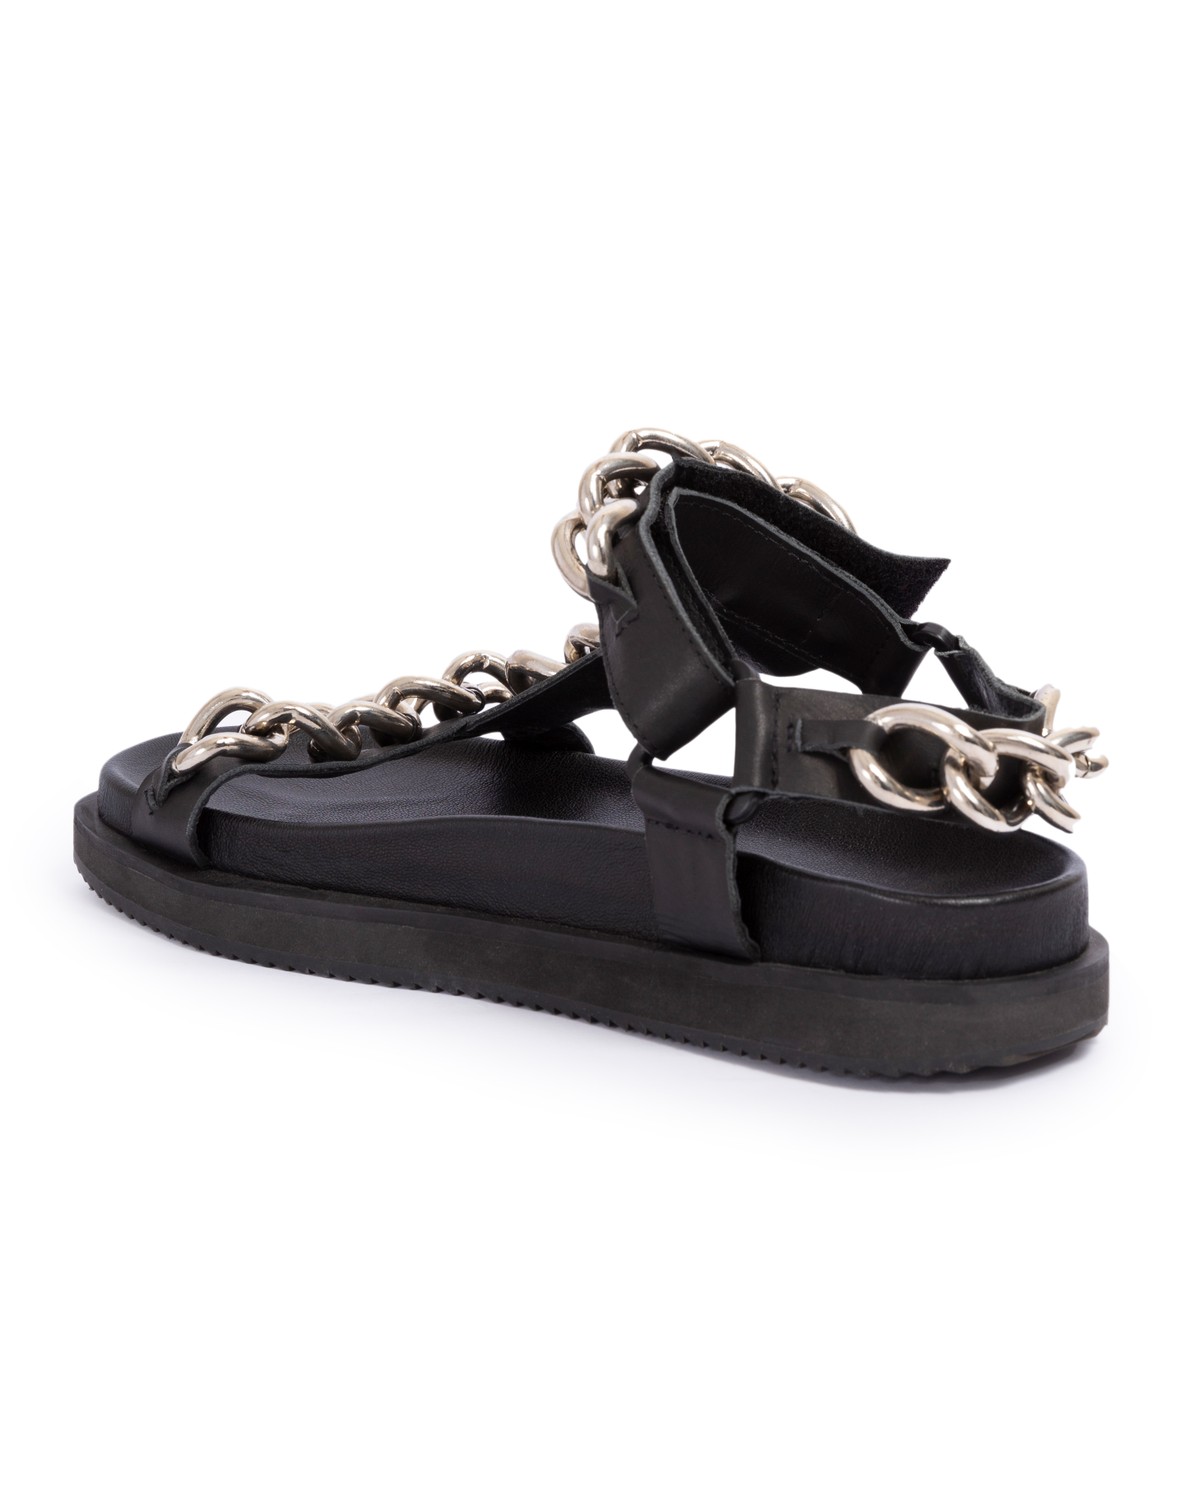 sandália em couro com correntes | leather sandals with chain detail